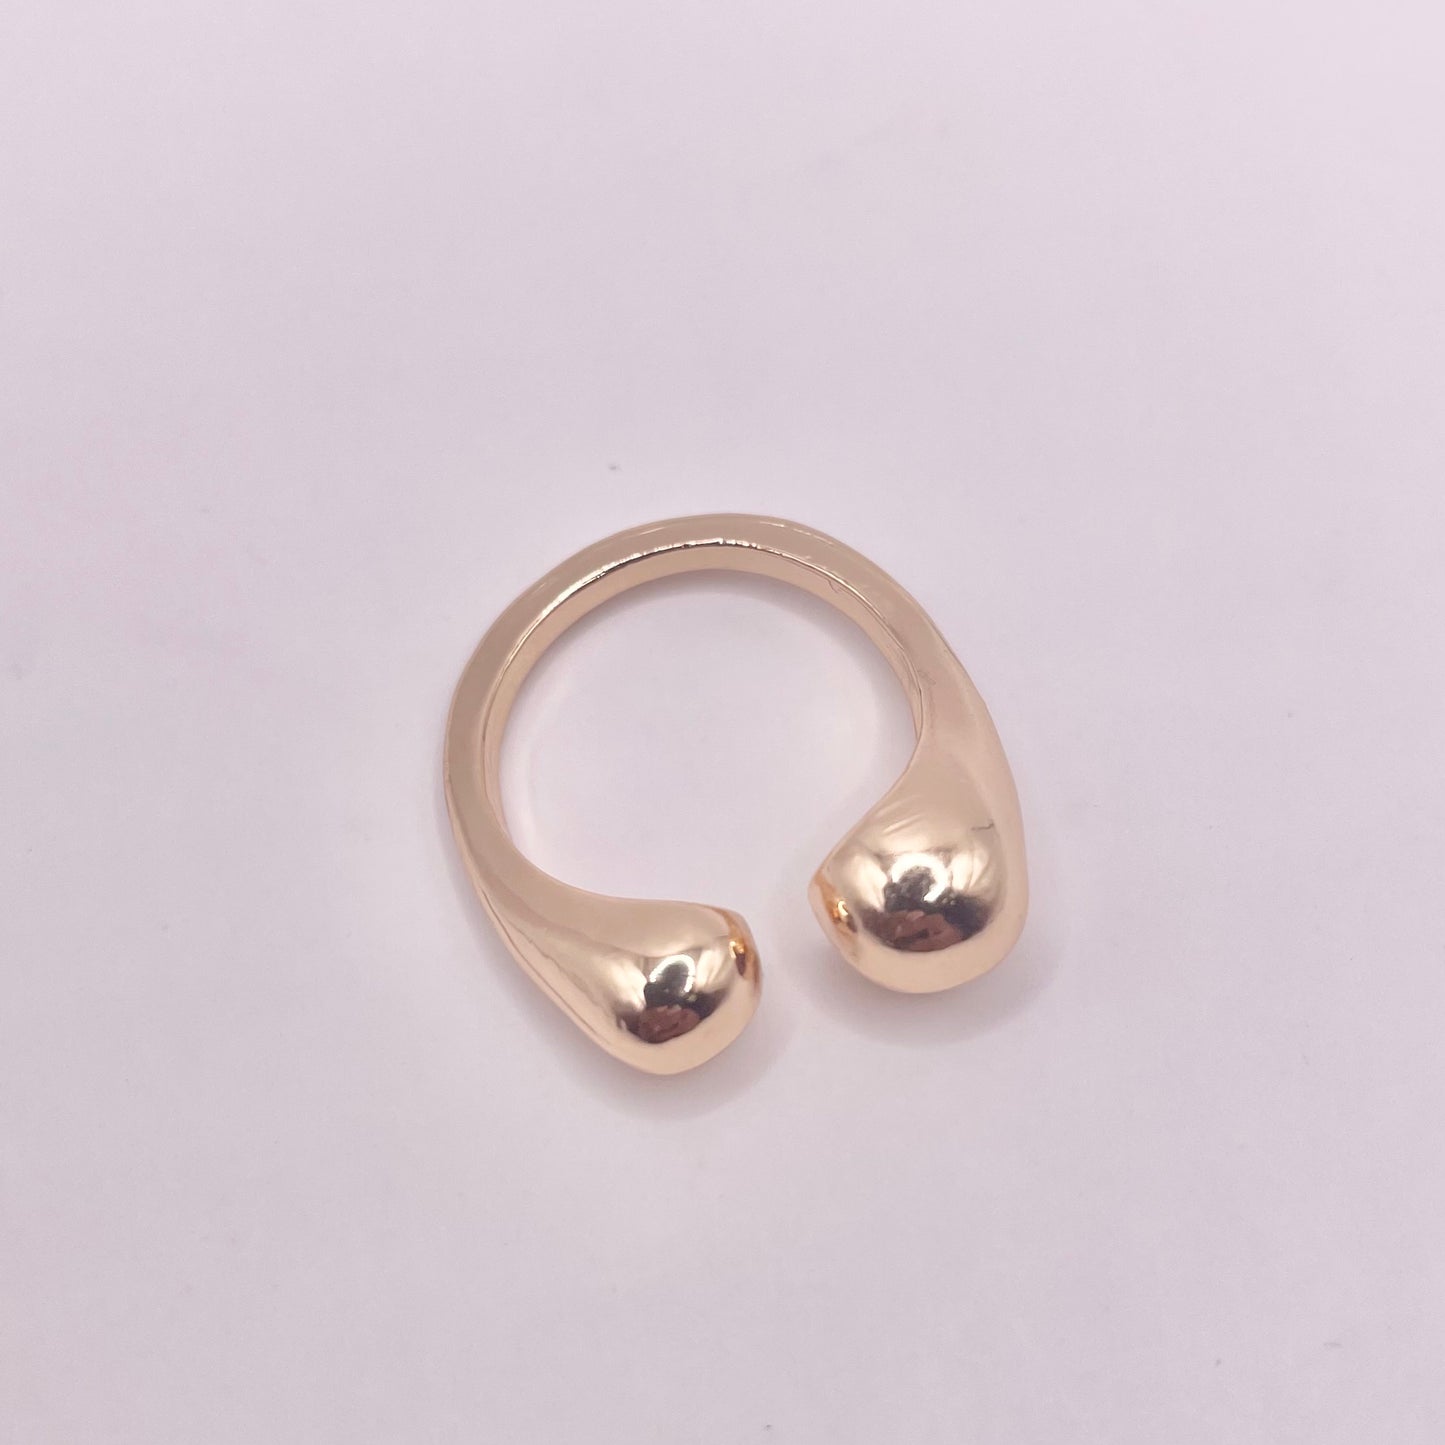 Gold/Silver Geometric Rings